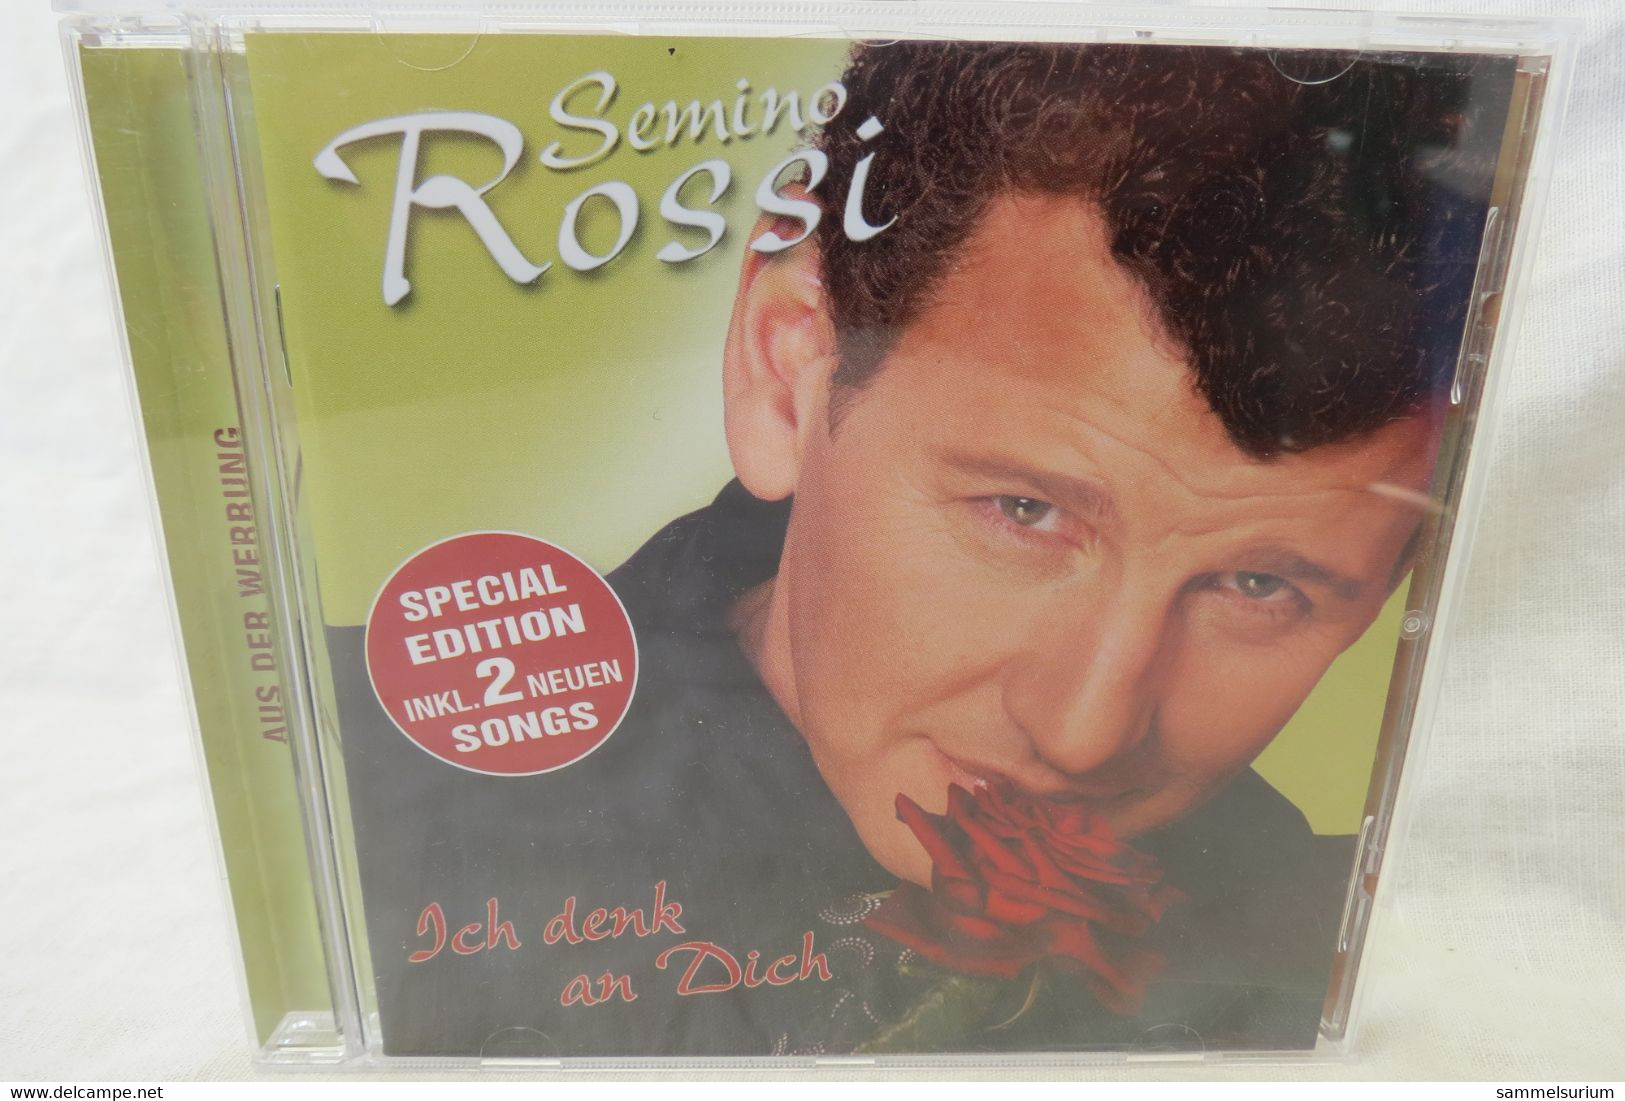 CD Semino Rossi "Ich Denk An Dich" Special Edition Inkl. 2 Neuen Songs - Sonstige - Deutsche Musik